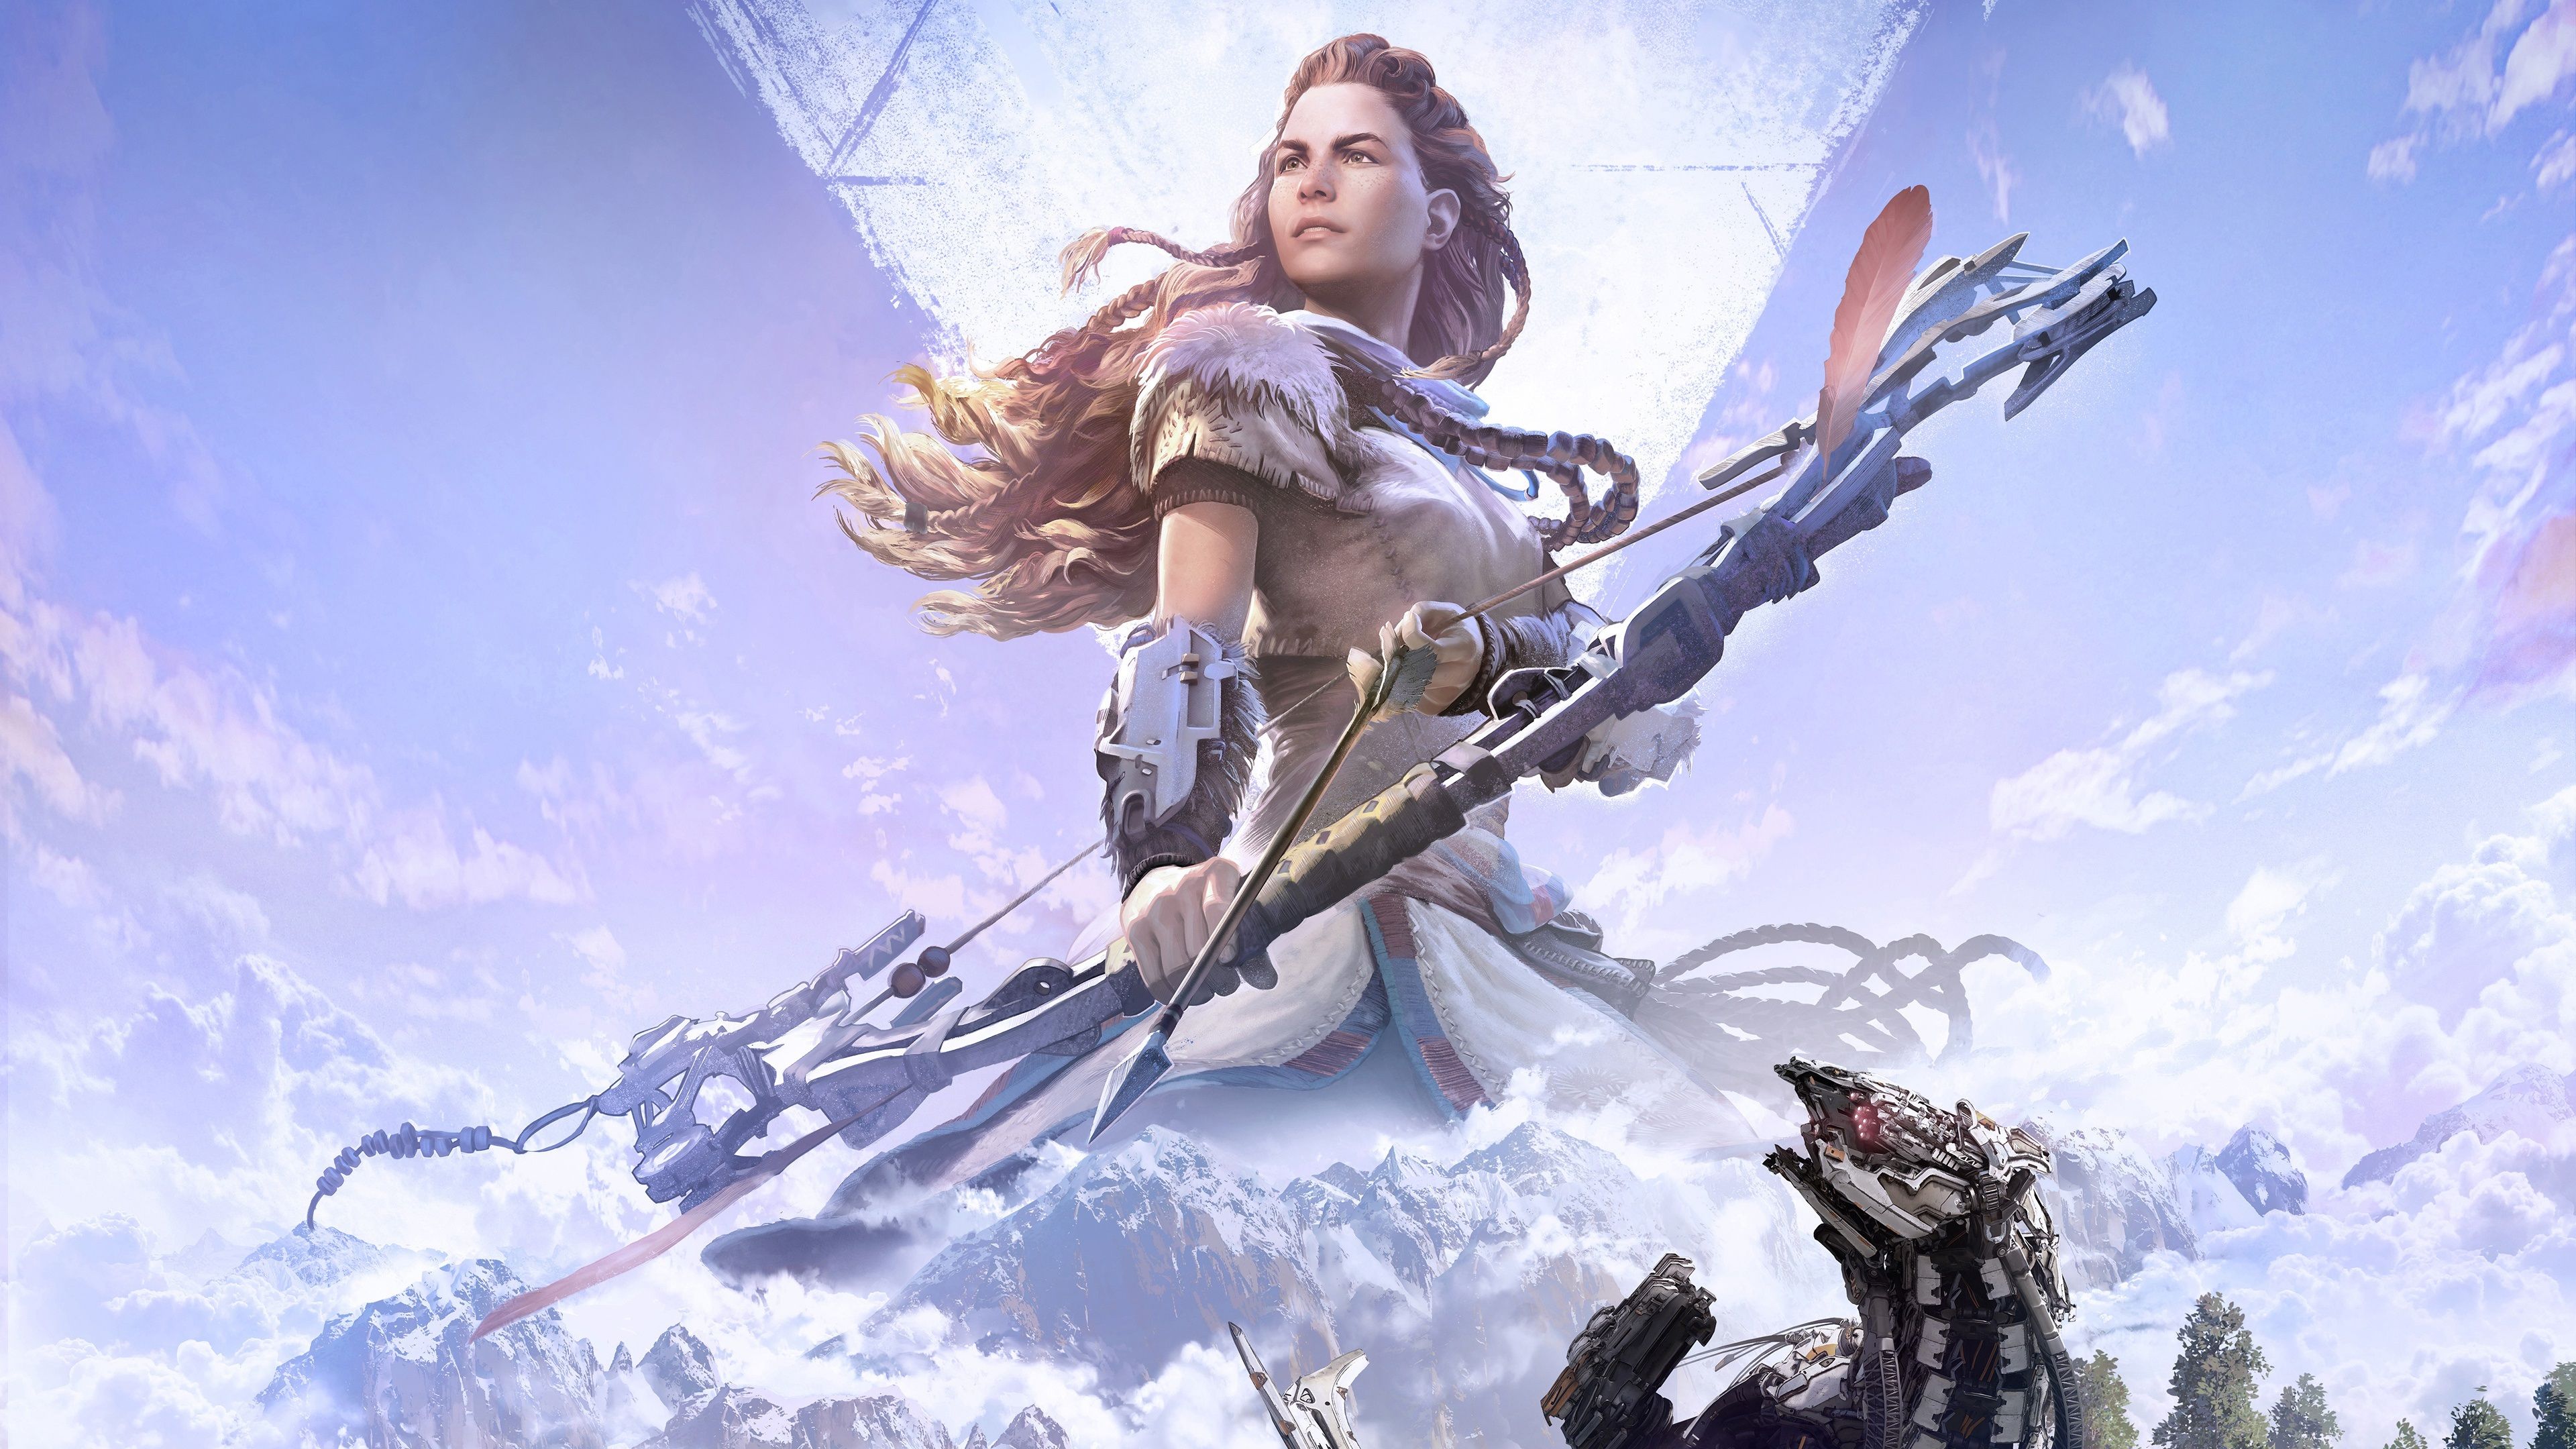 Wallpapers Horizon: Zero Dawn, archer, girl, PS4 games 3840x2160 UHD 4K Picture, Image